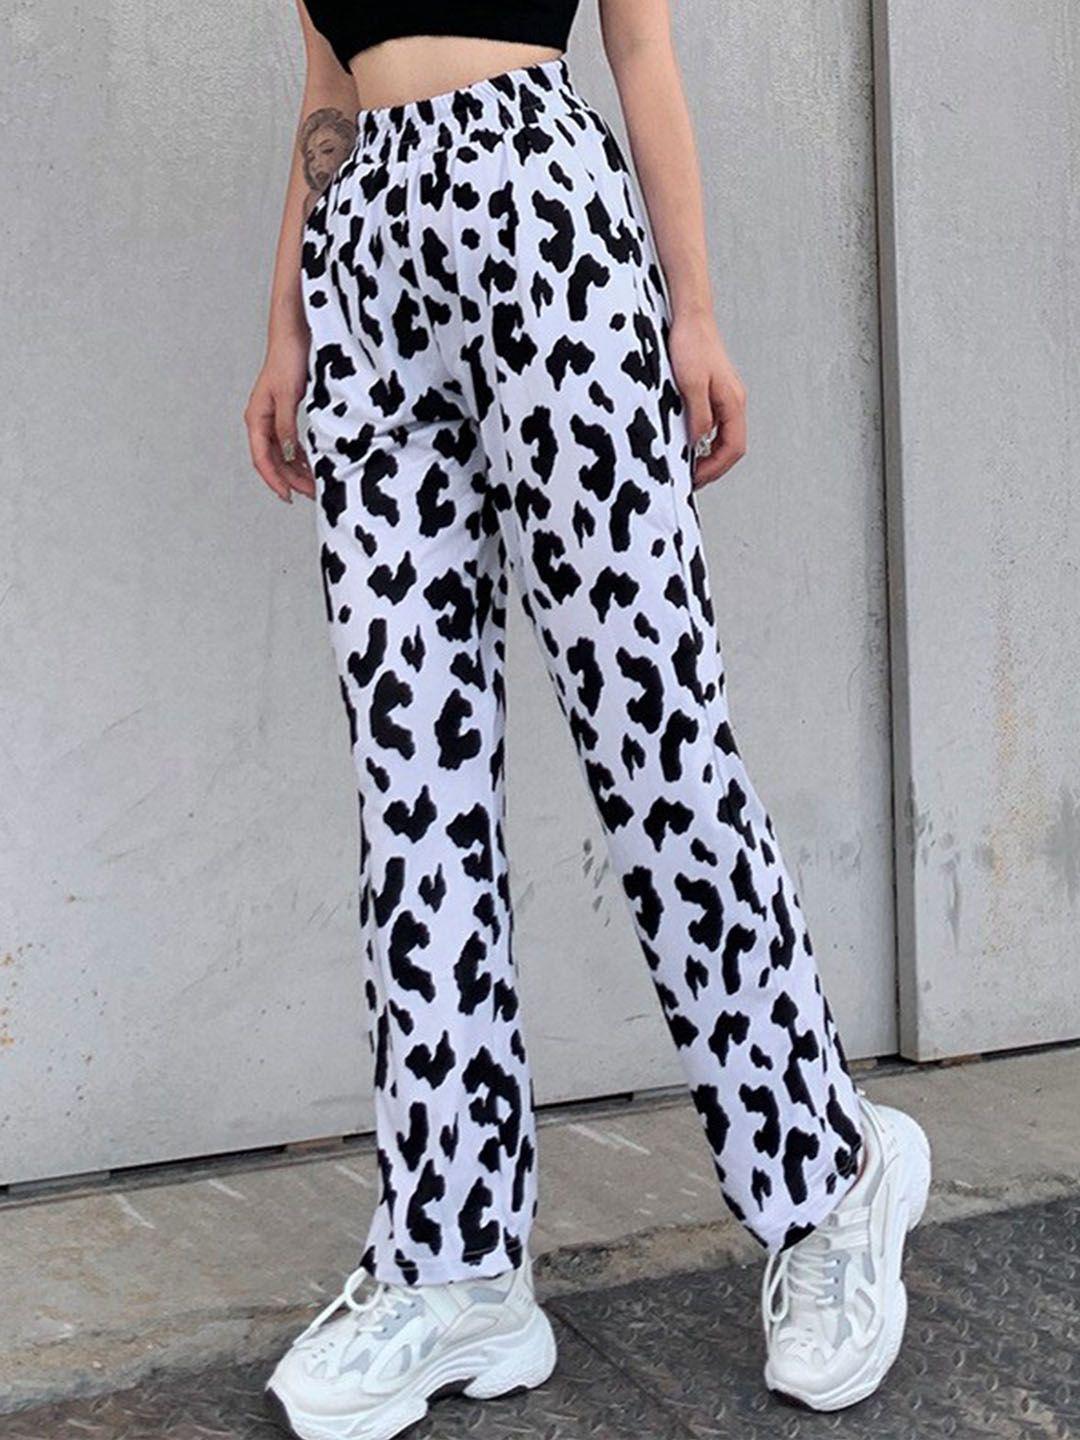 stylecast-x-kpop-women-black-animal-printed-original-trousers